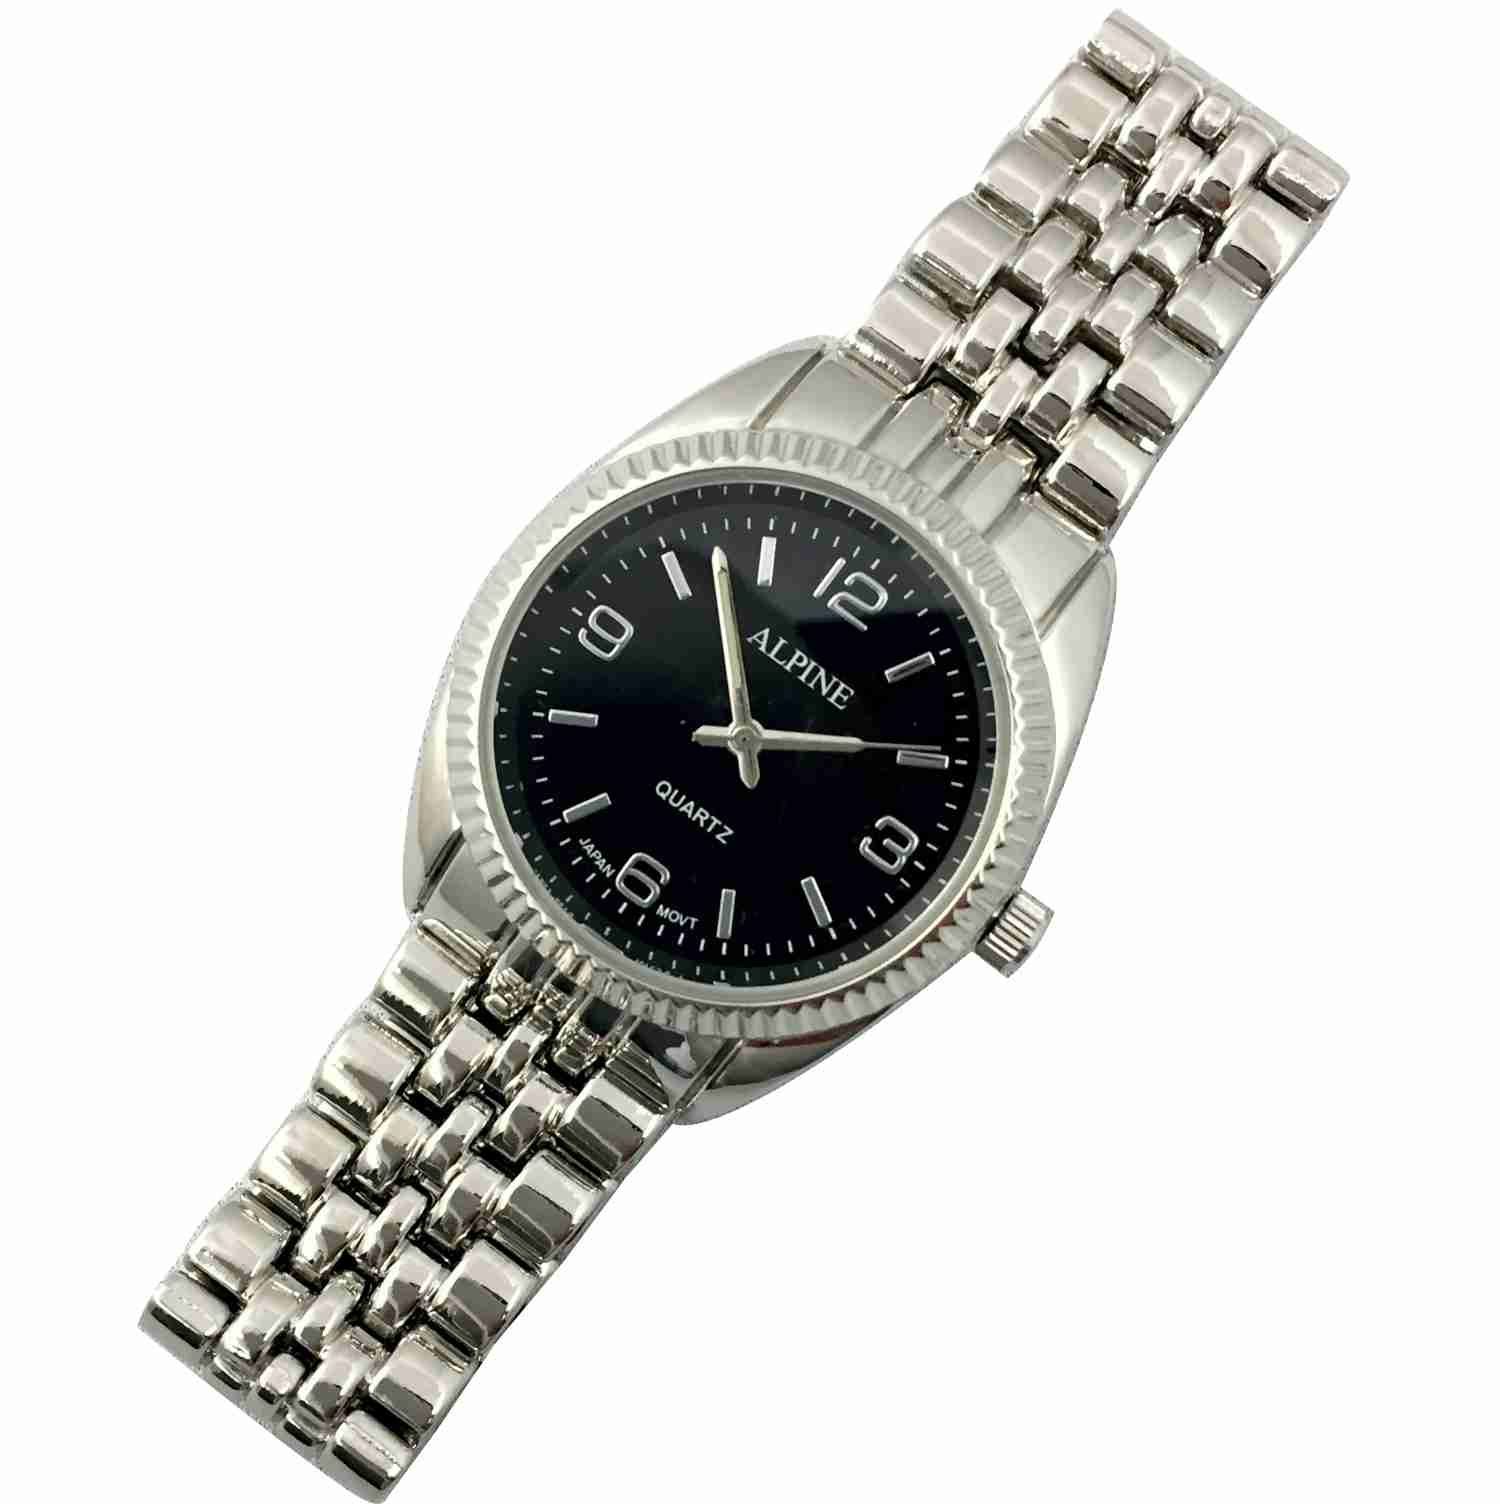 Mens Bracelet Watch - Silver/ Black Dial